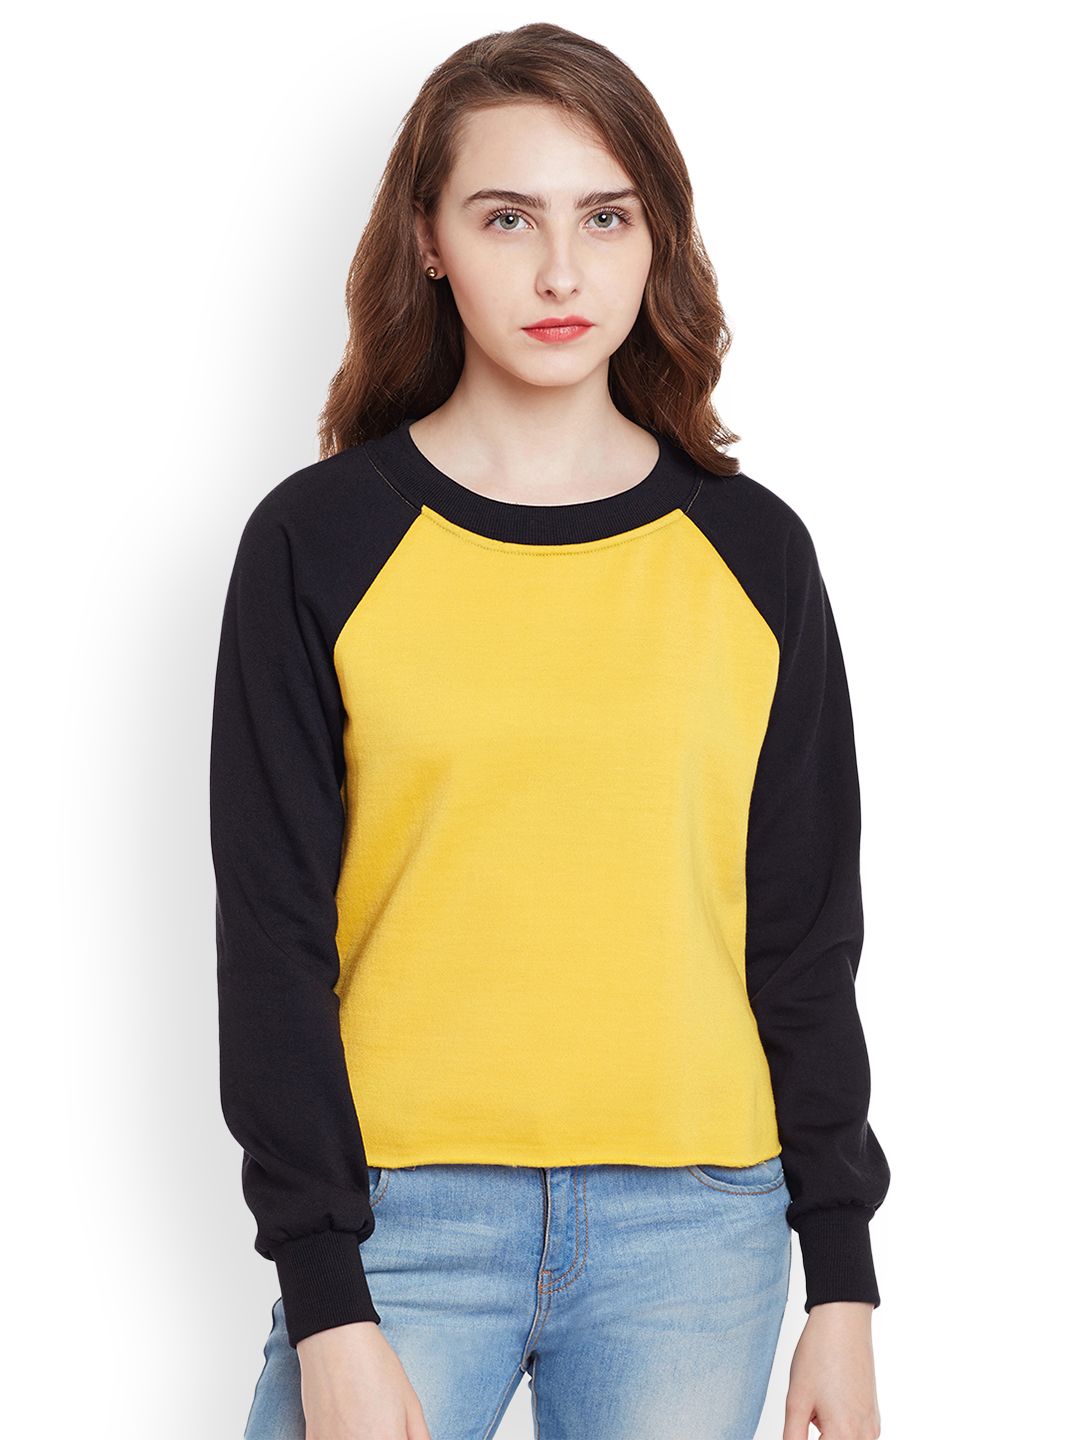 Belle Fille Women Yellow & Black Solid Sweatshirt Price in India